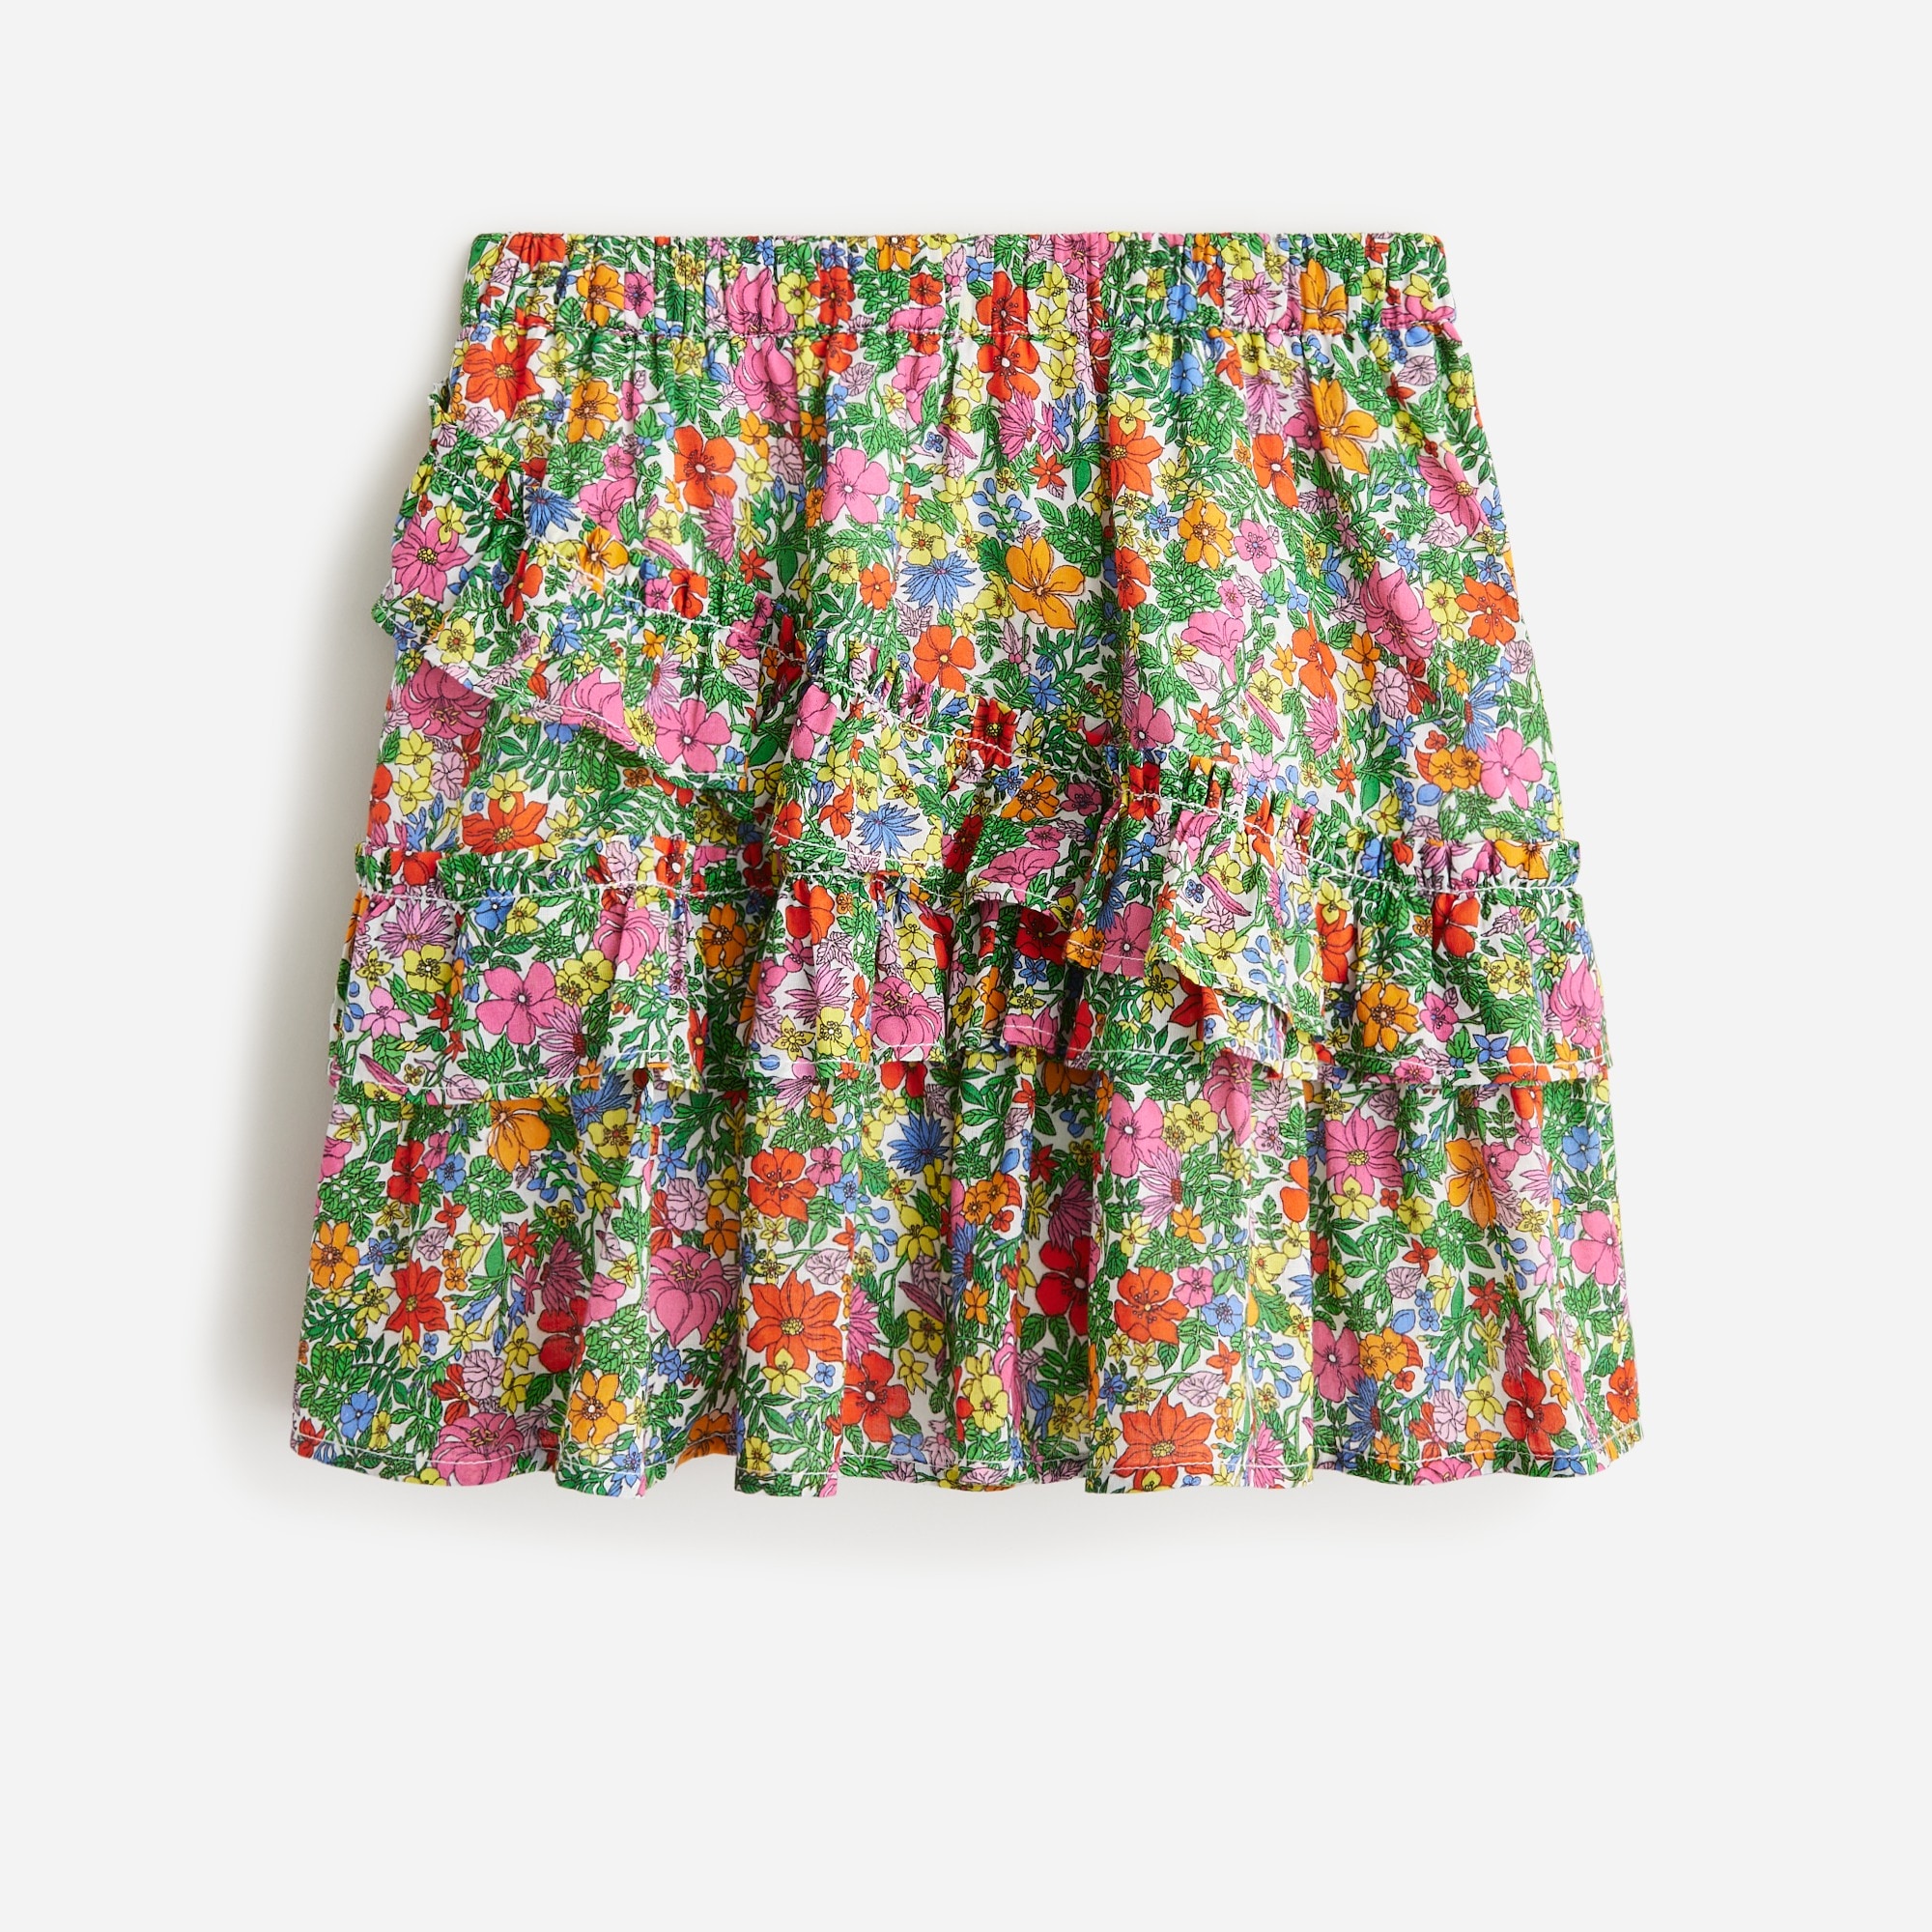  Girls' asymmetrical ruffle mini skirt in floral cotton voile